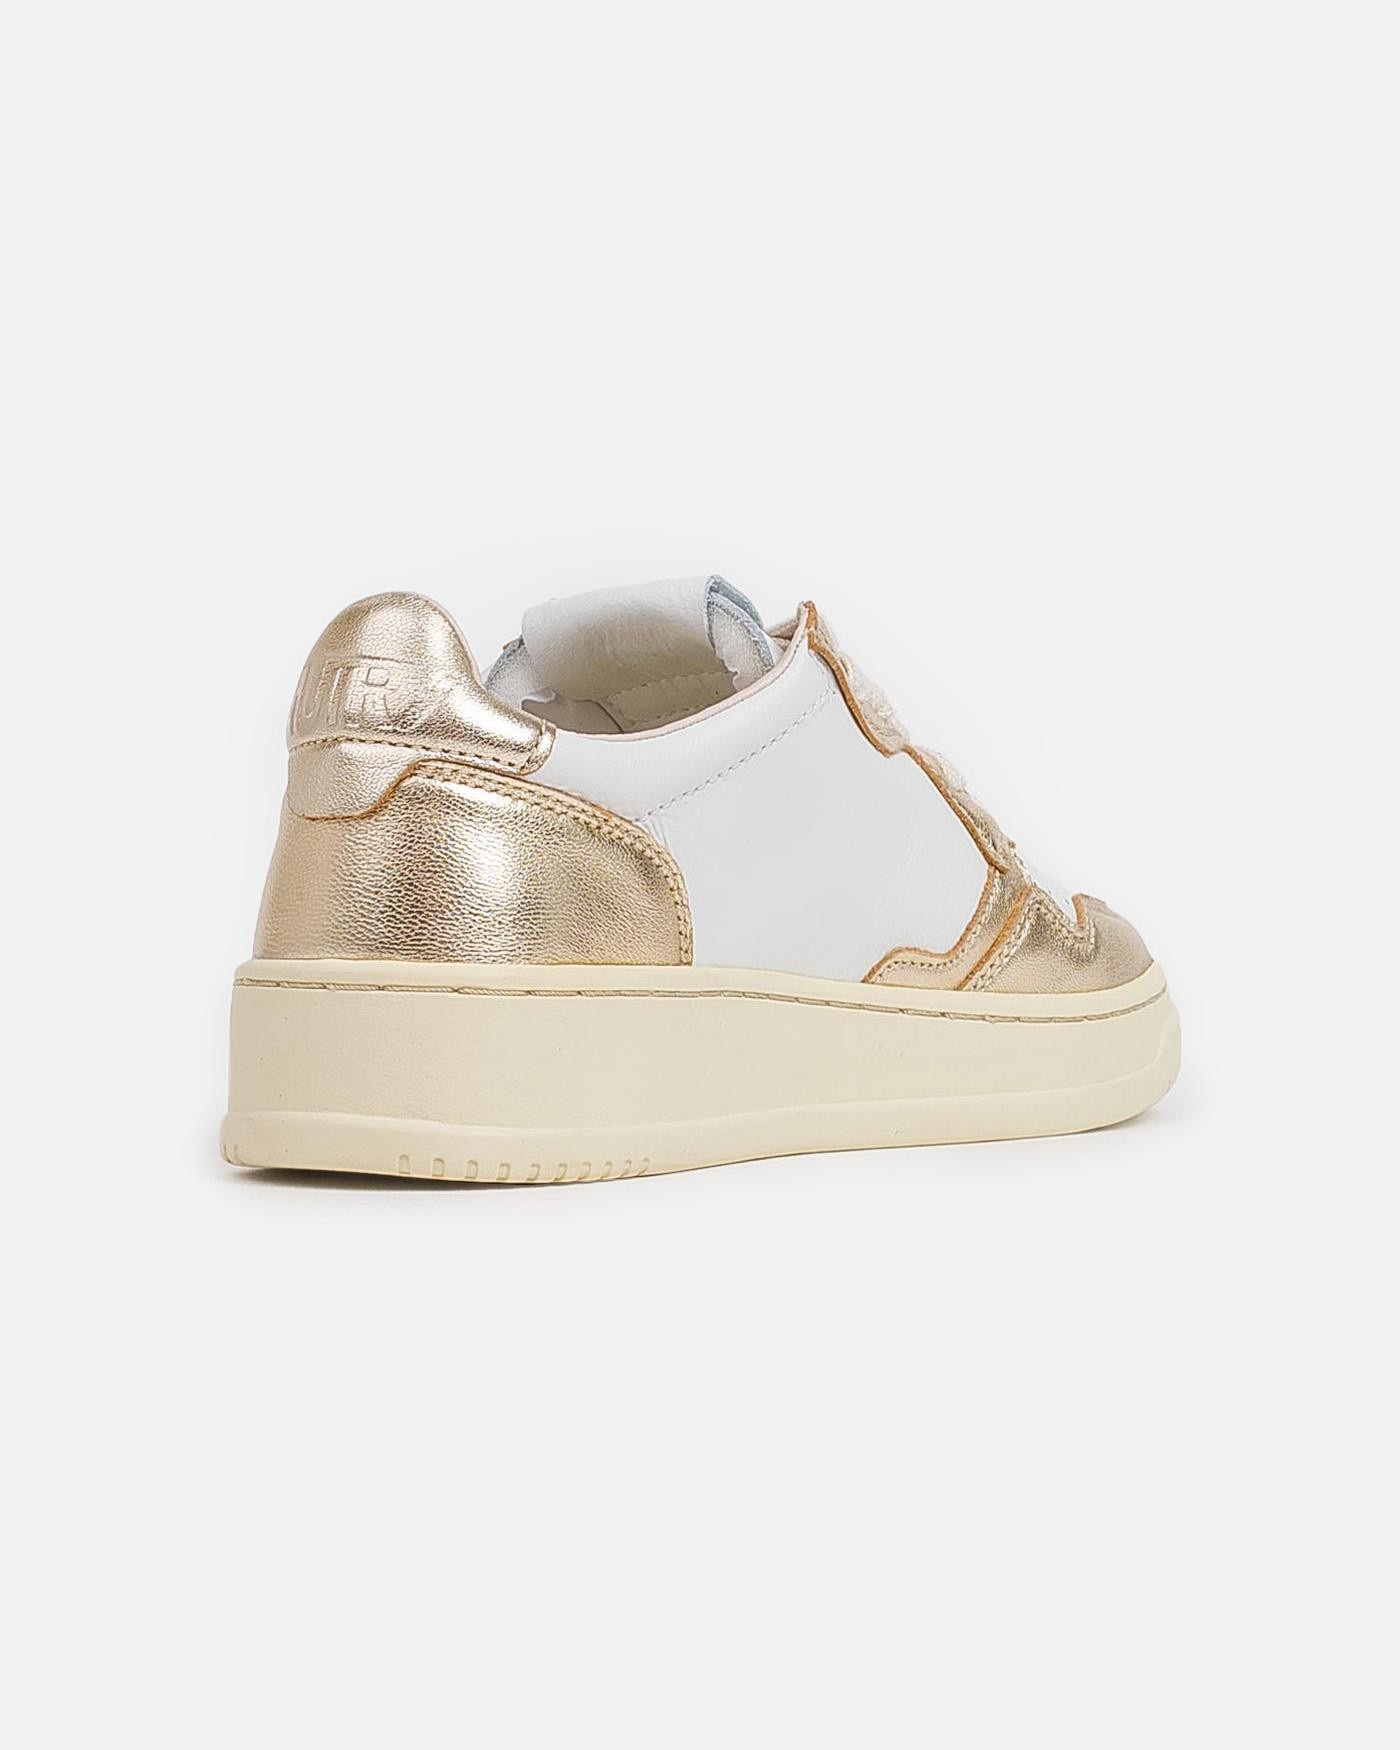 autry-zapatillas-aulw-wb-16-sneaker-white-gold-blanco-dorado 1